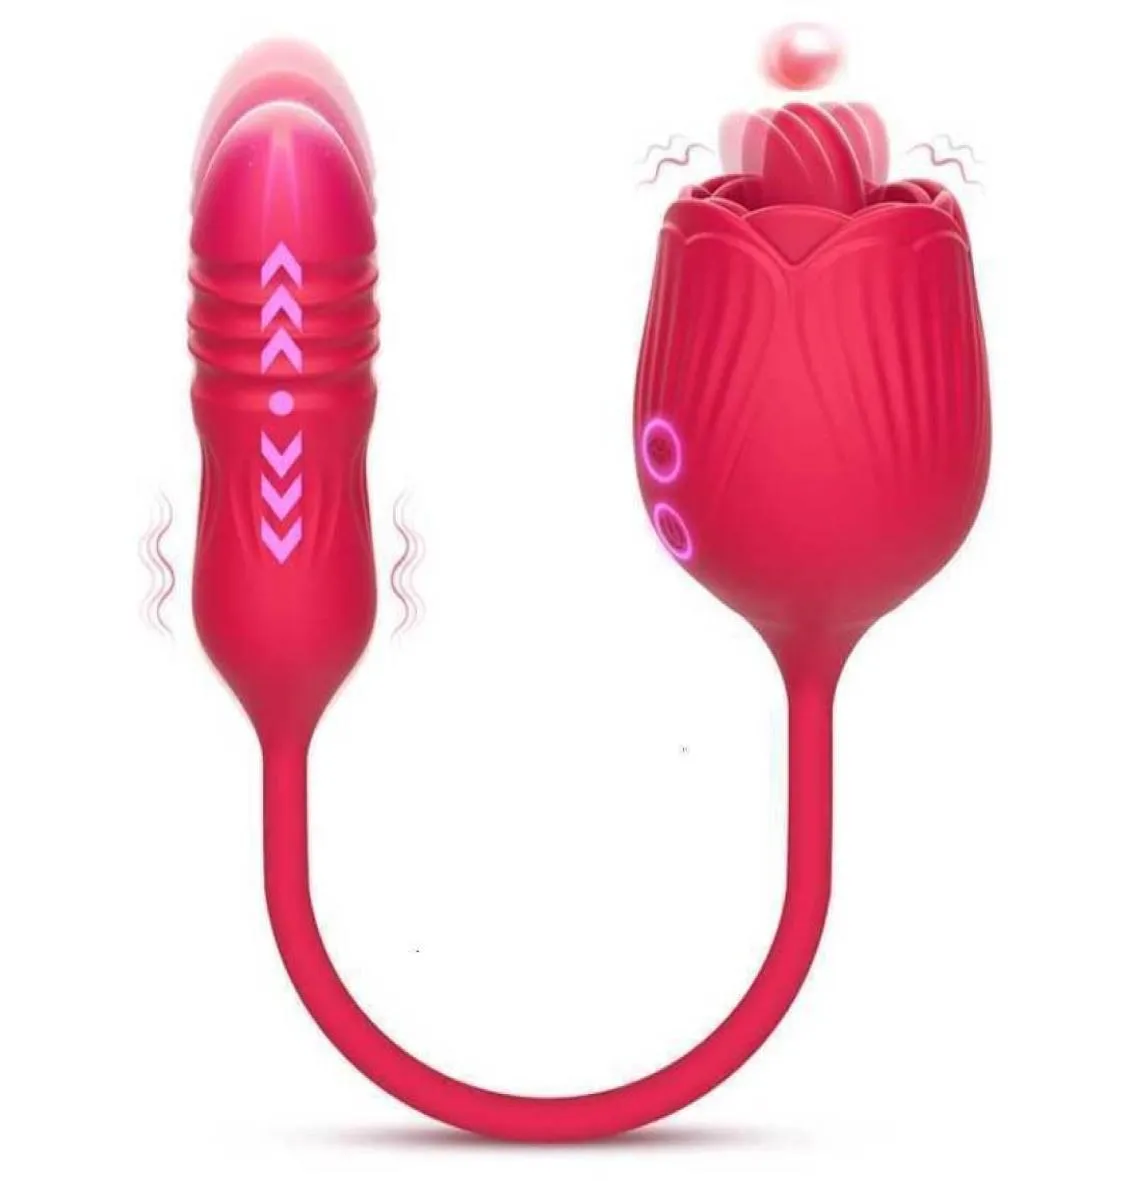 Adult Massager Thrusting Rose Vibrator Female Sex Toy Dildo g Spot Tongue Licking Masturbation Clitoris Stimulator Goods for Silen3601524